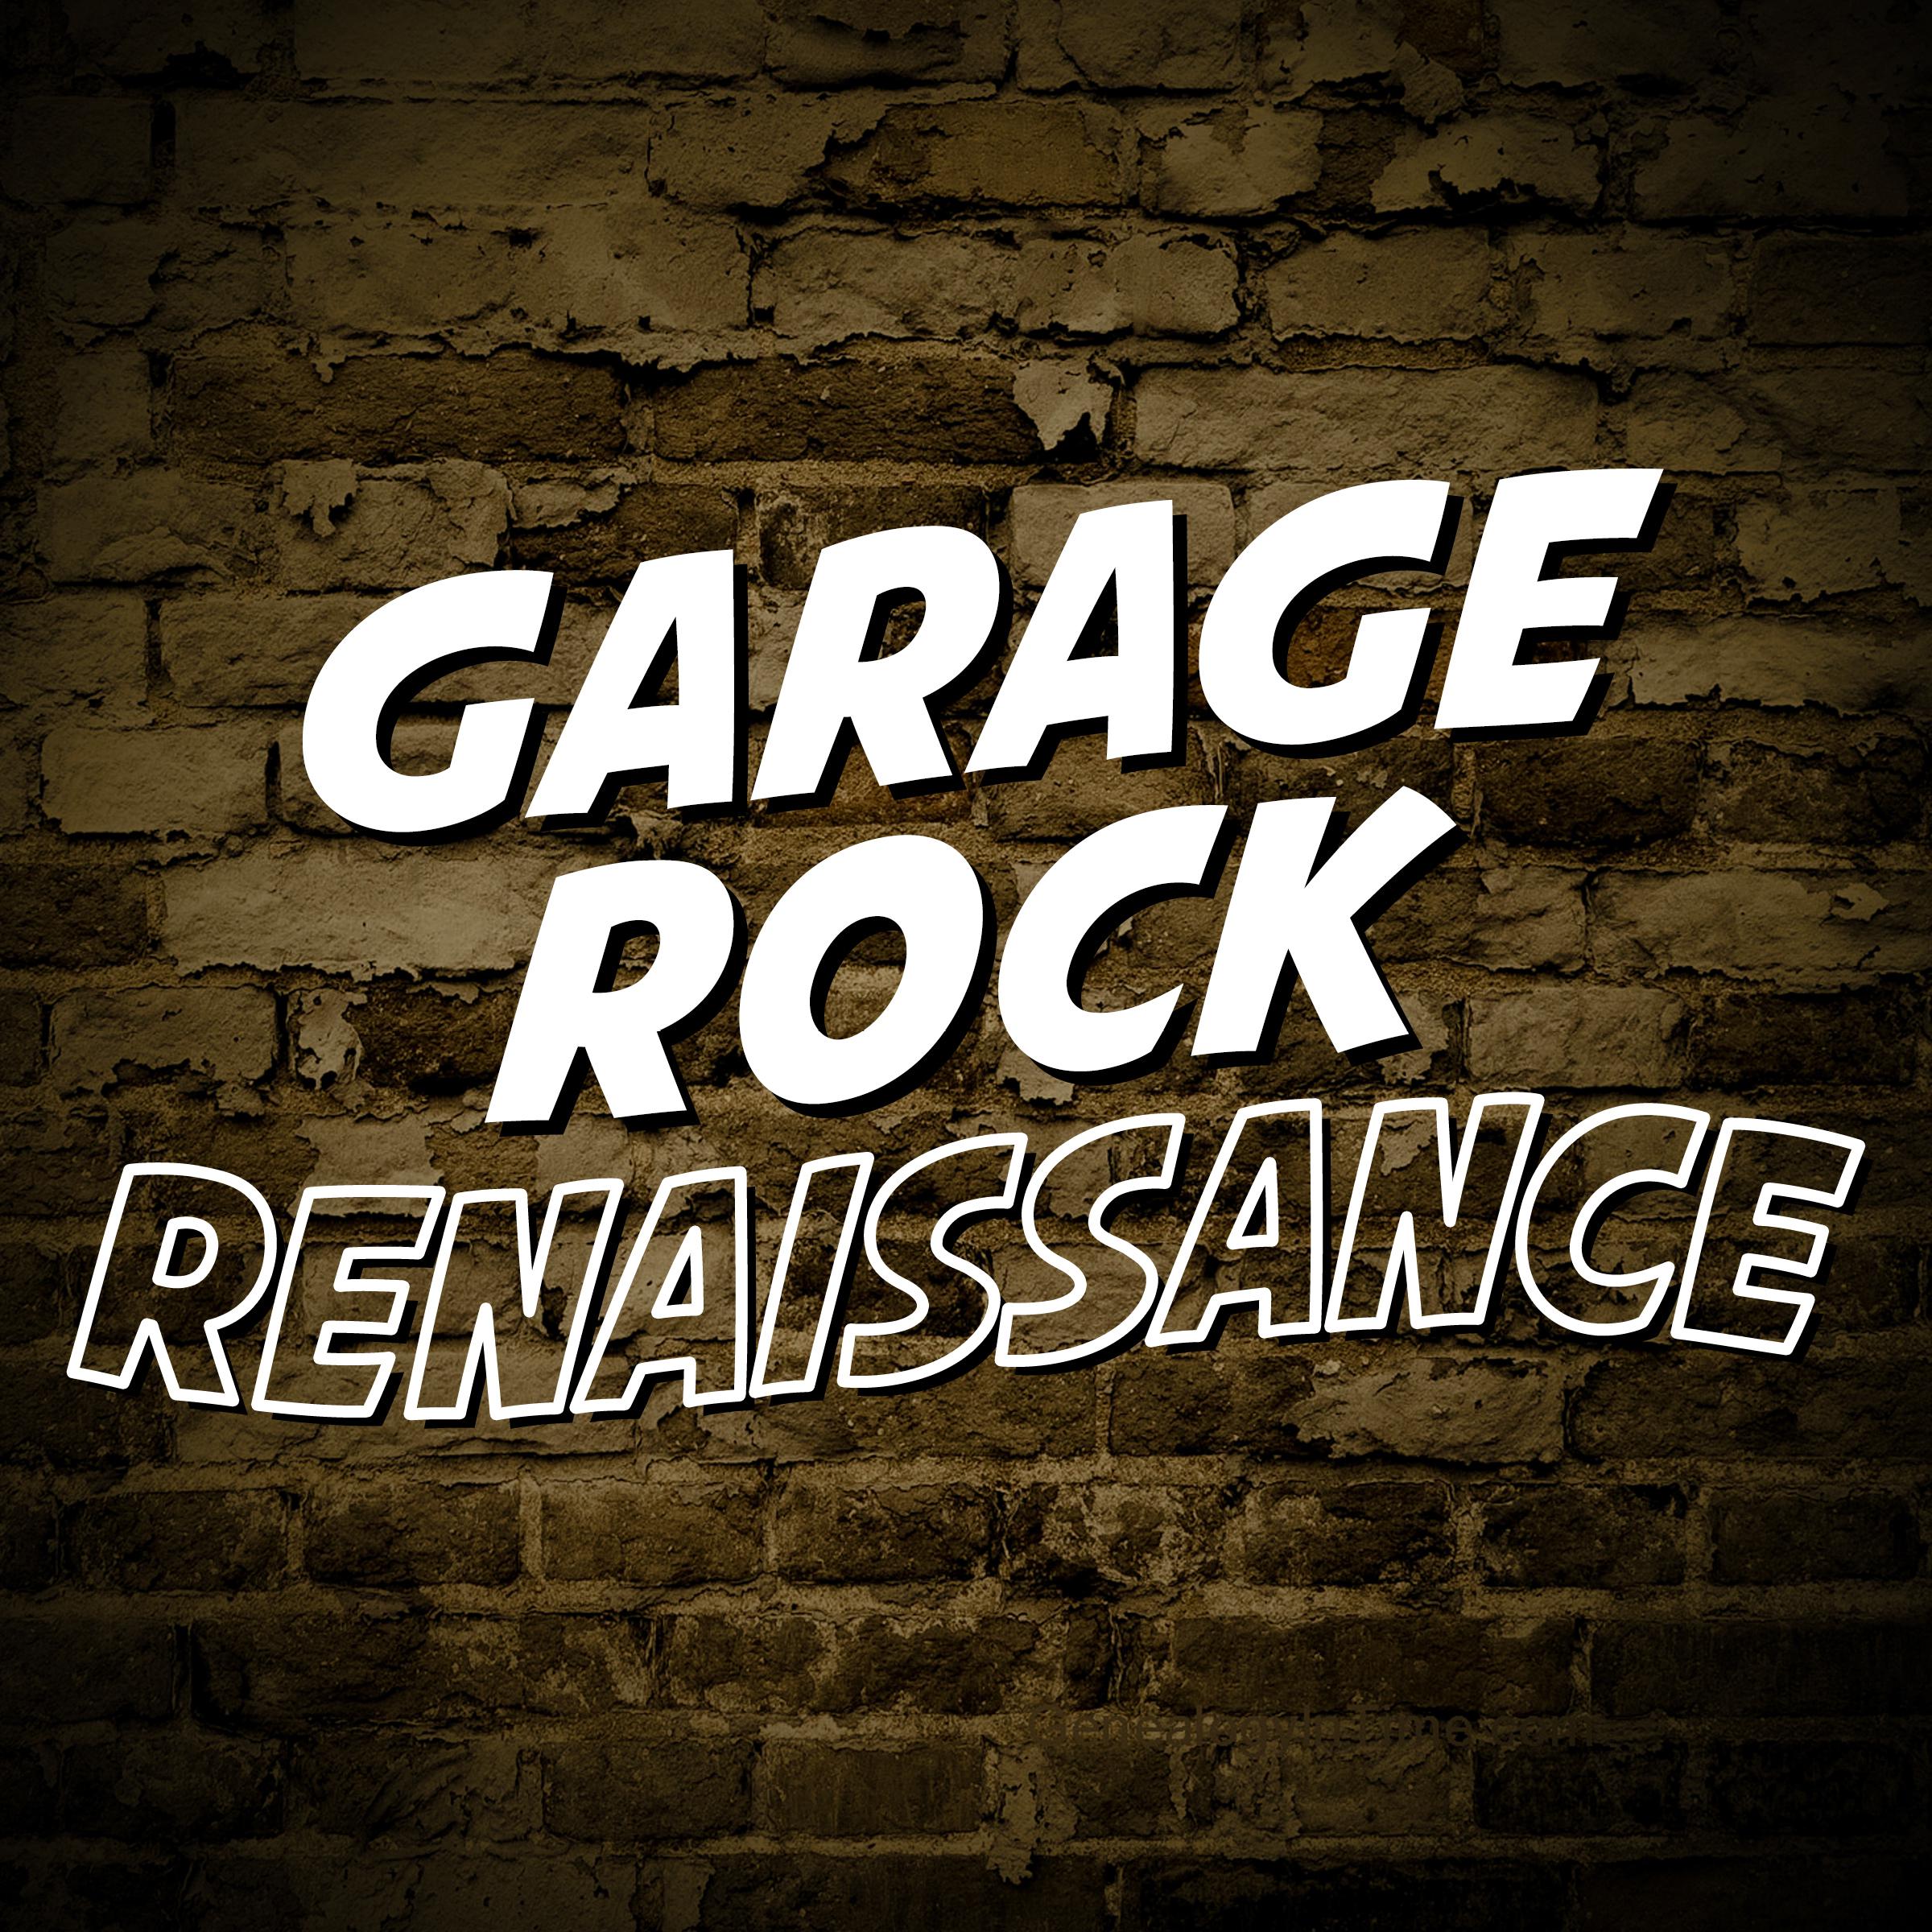 Garage Rock Renaissance